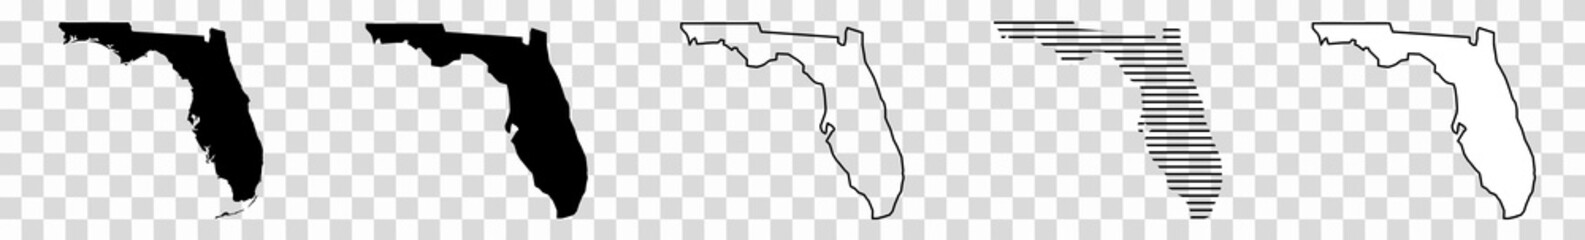 florida map black | state border | united states | us america | transparent isolated | variations